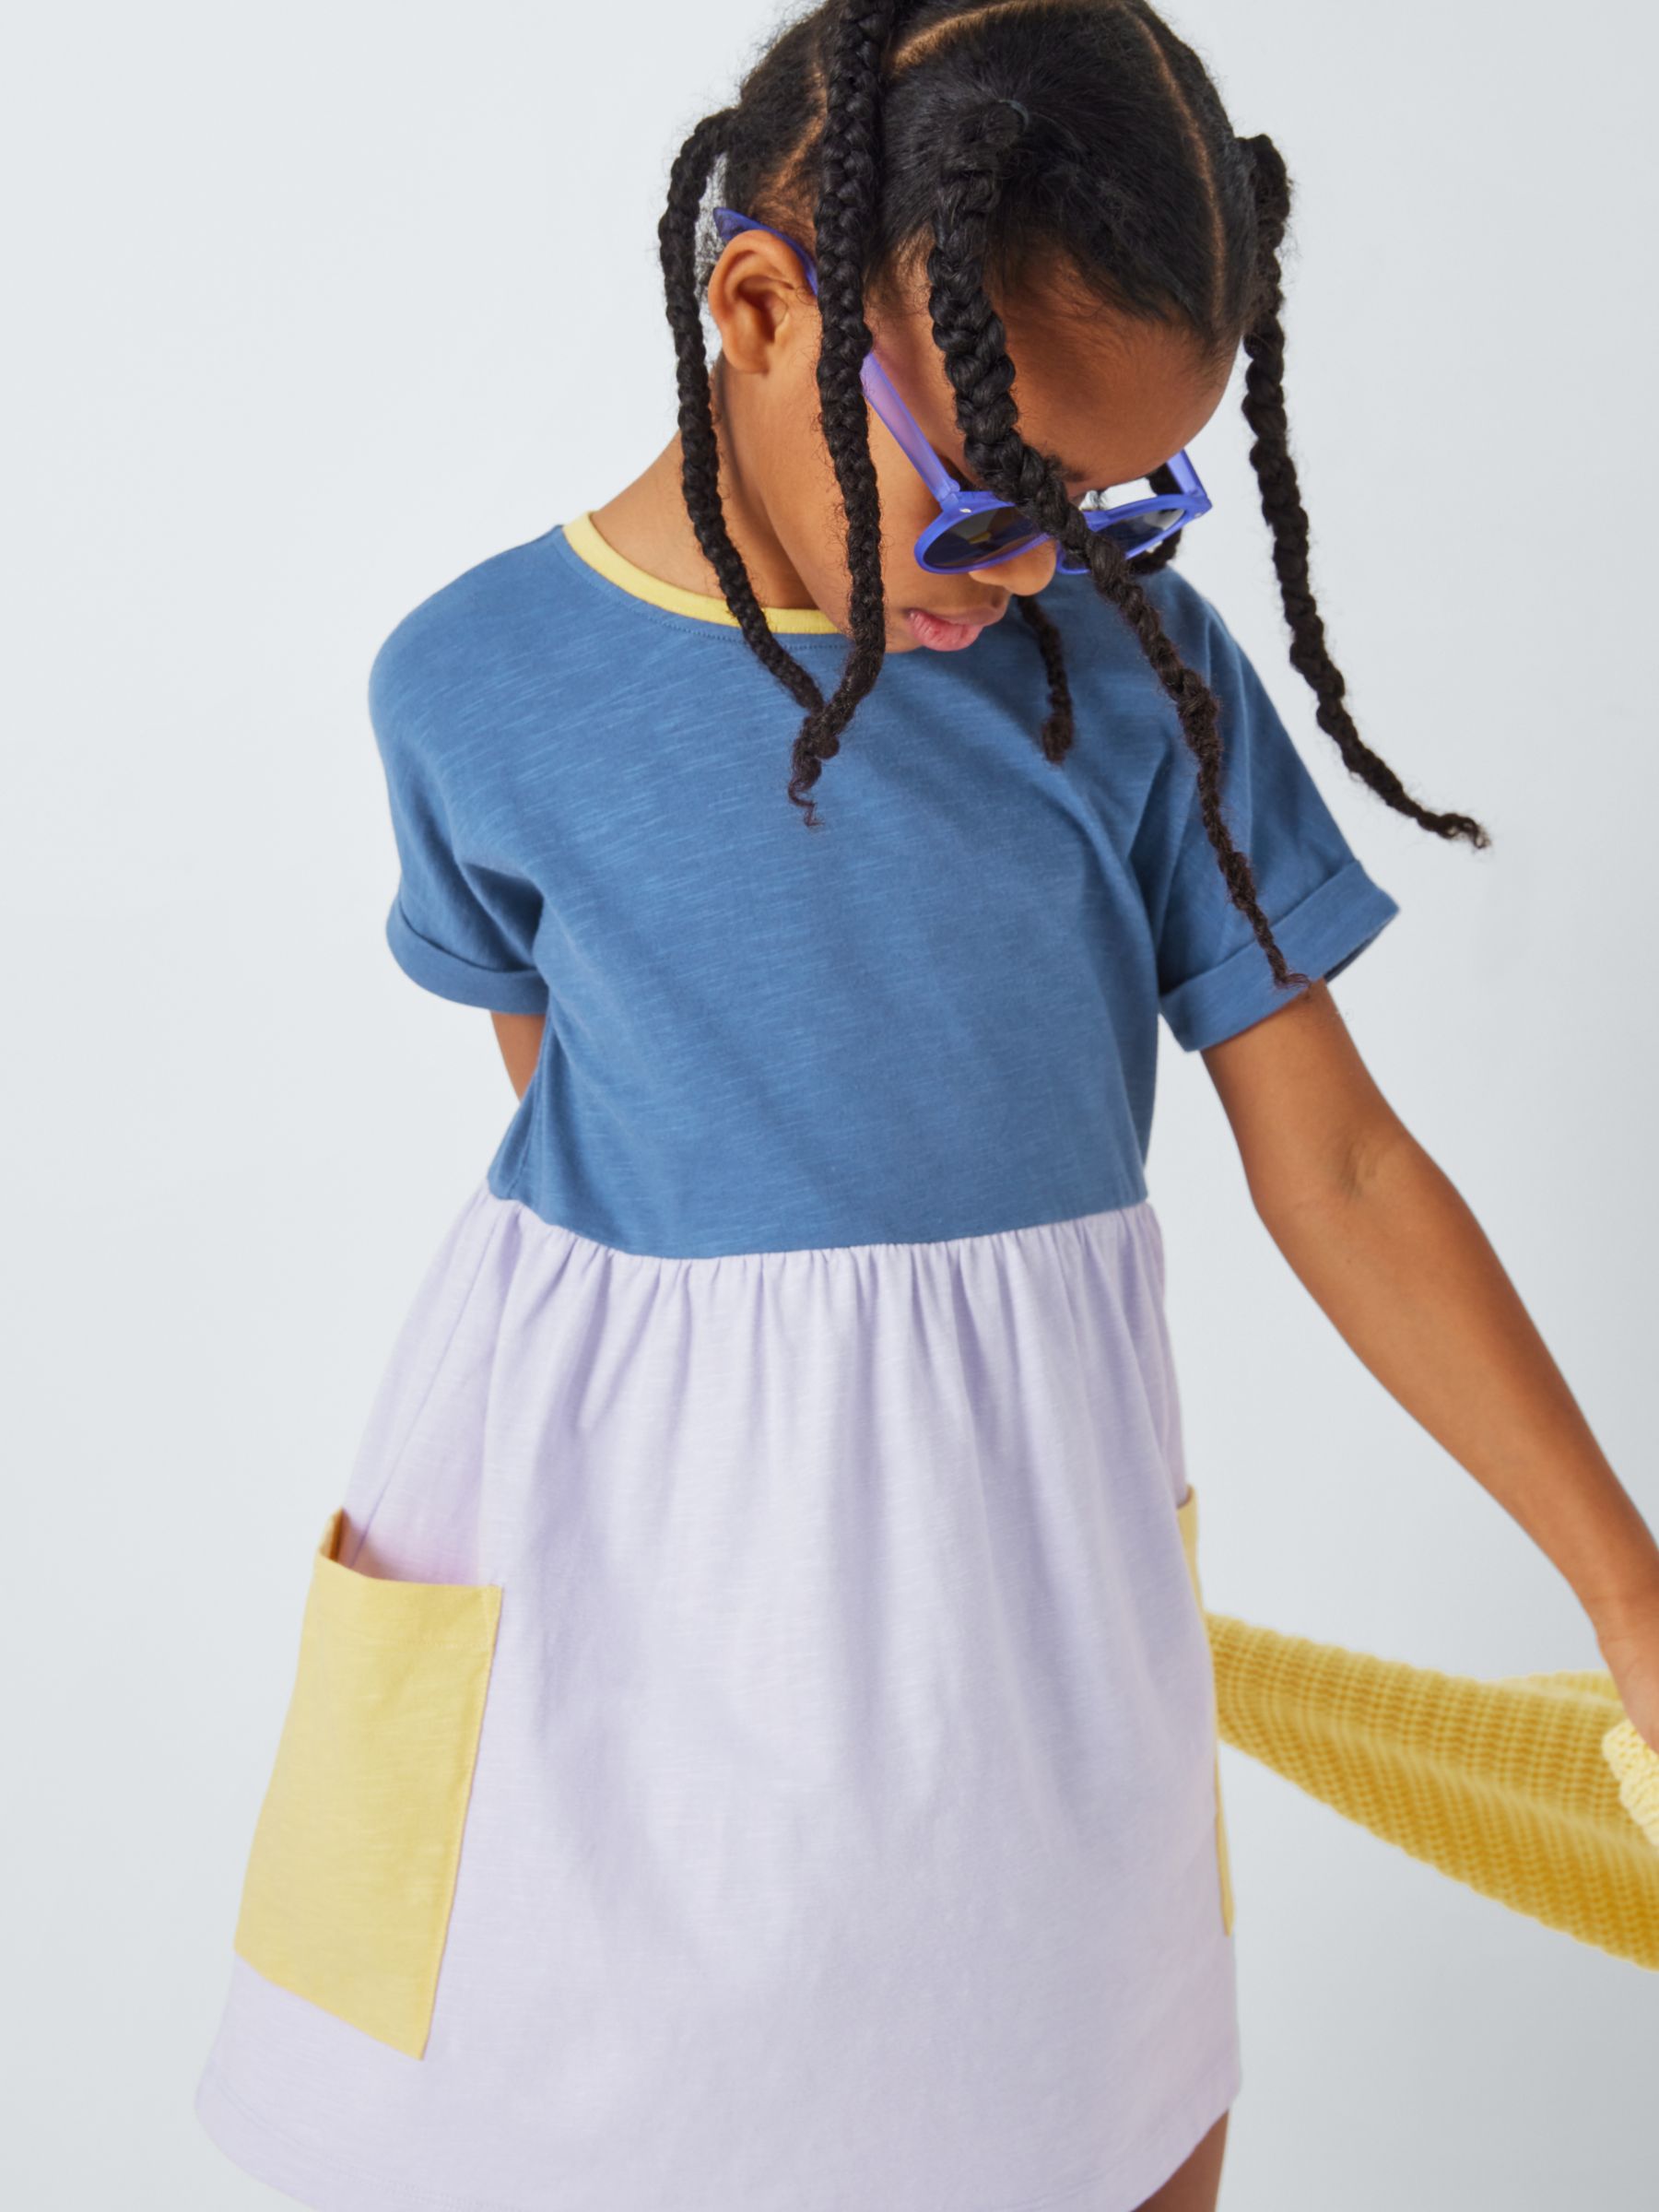 John Lewis ANYDAY Kids' Colour Block Dress, Bijou Blue, 9 years